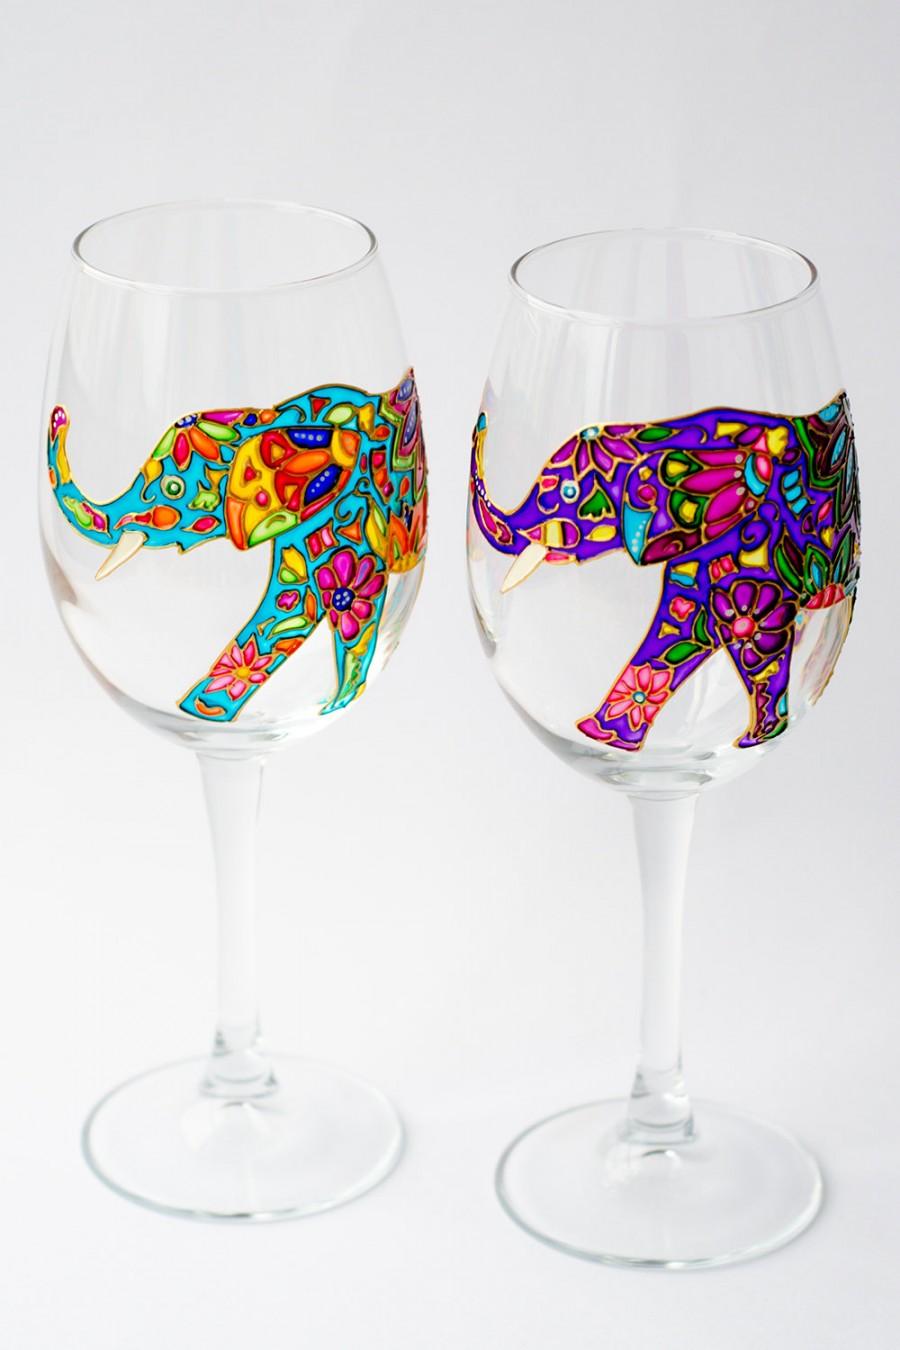 Mariage - Elephant Wine Glasses Hand Painted, Wine glass for Bridesmaid Wedding Glasses, Bohemian Elephant, Toasting glasses - $54.50 USD